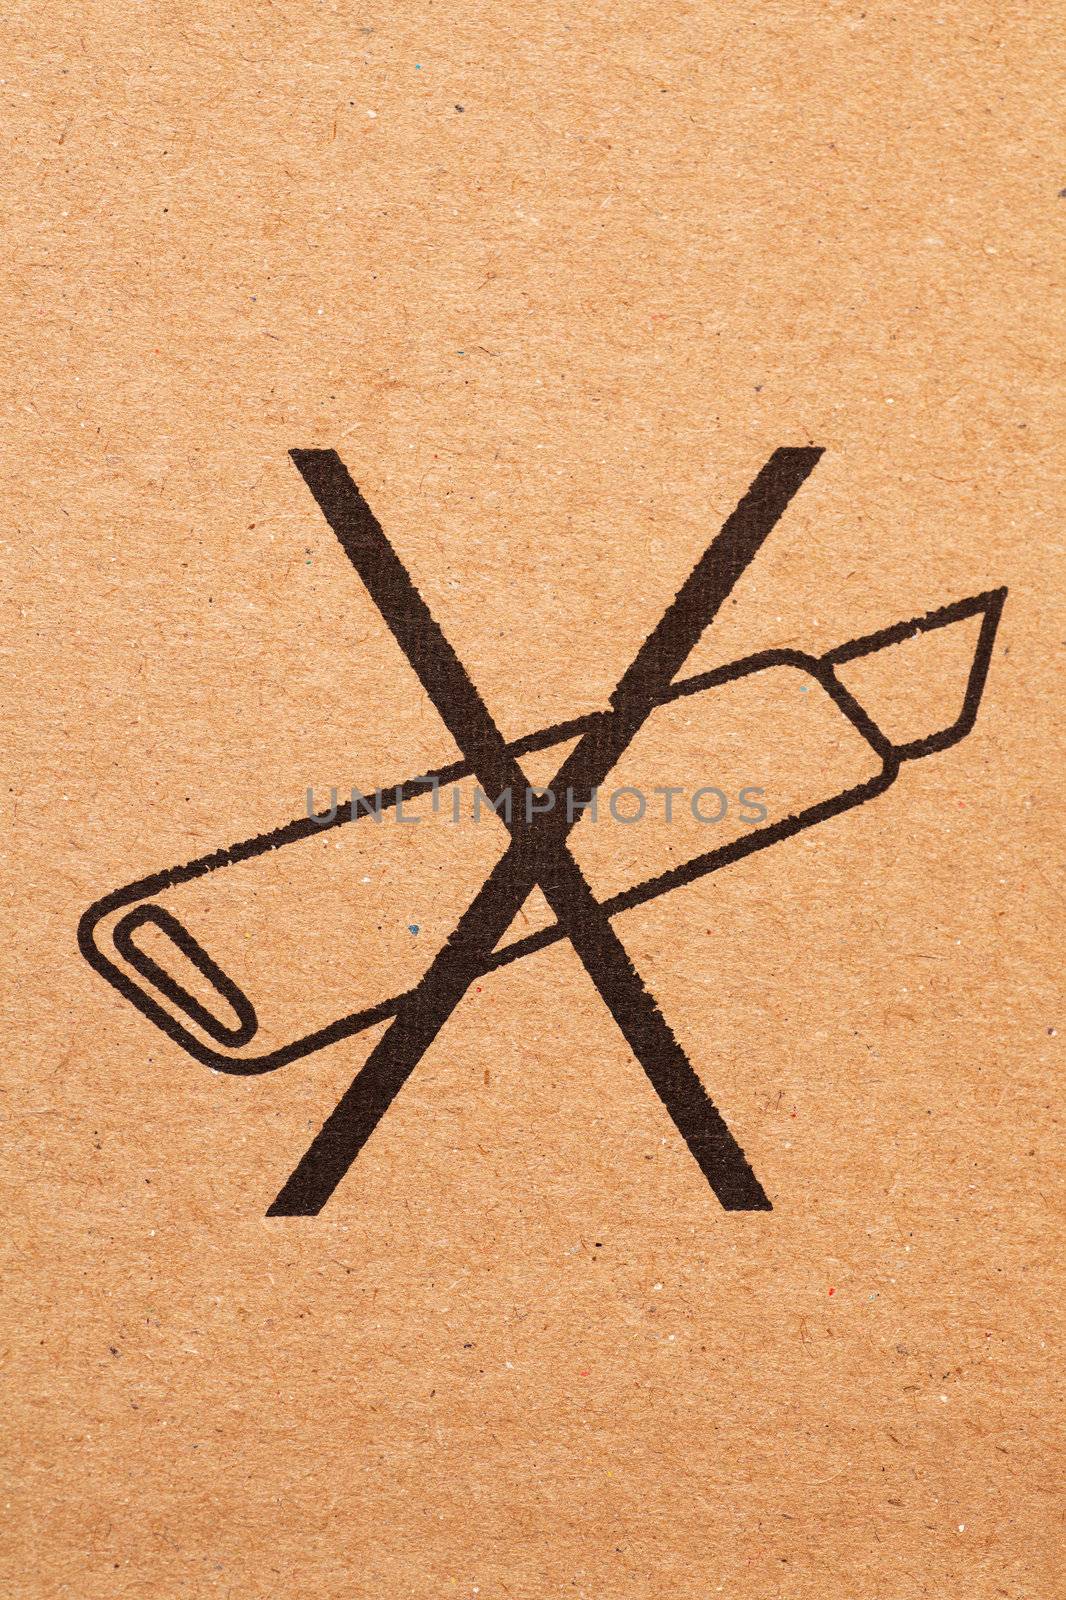 "Do not cut" sign on a cardboard box